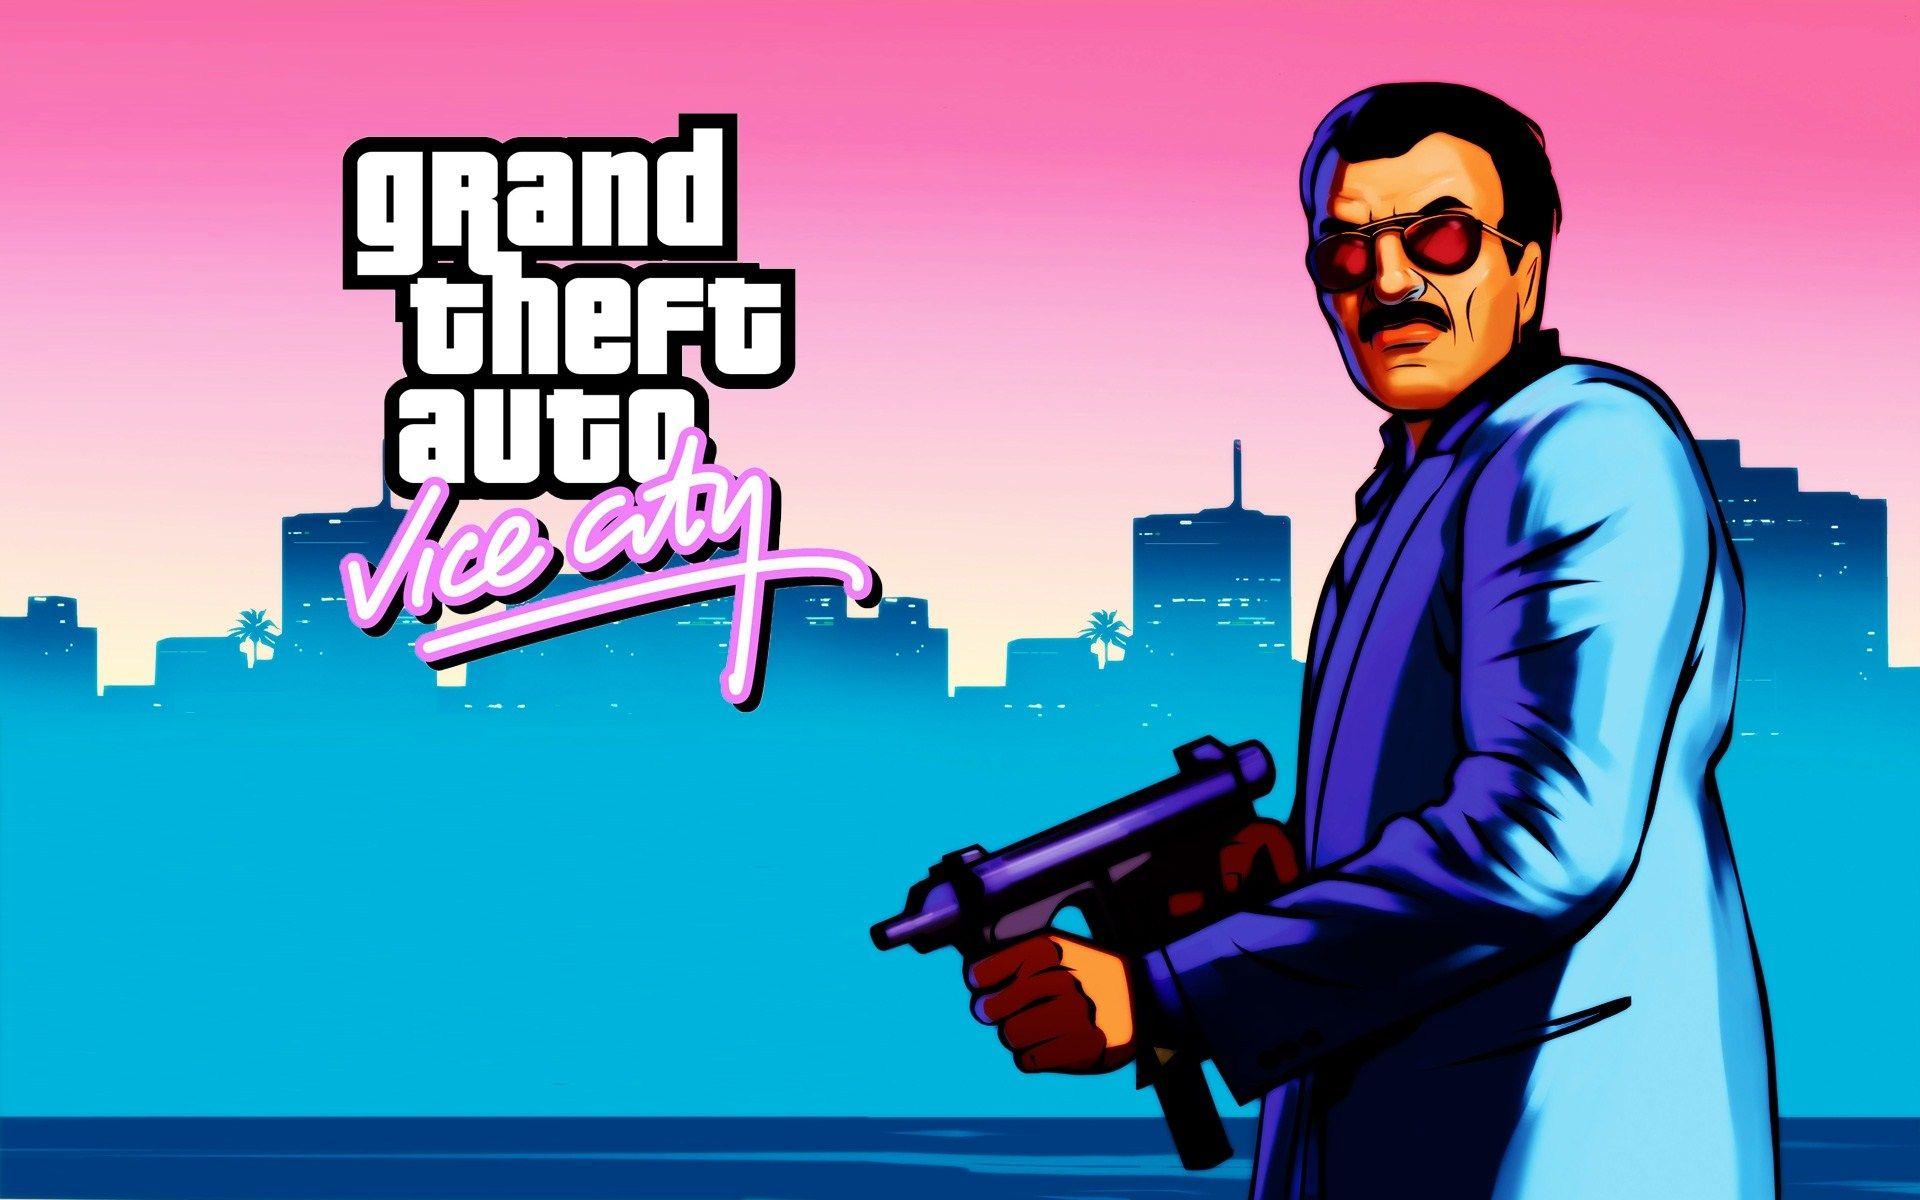 Grand Theft Auto Vice City Wallpaper, Grand Theft Auto Vice City